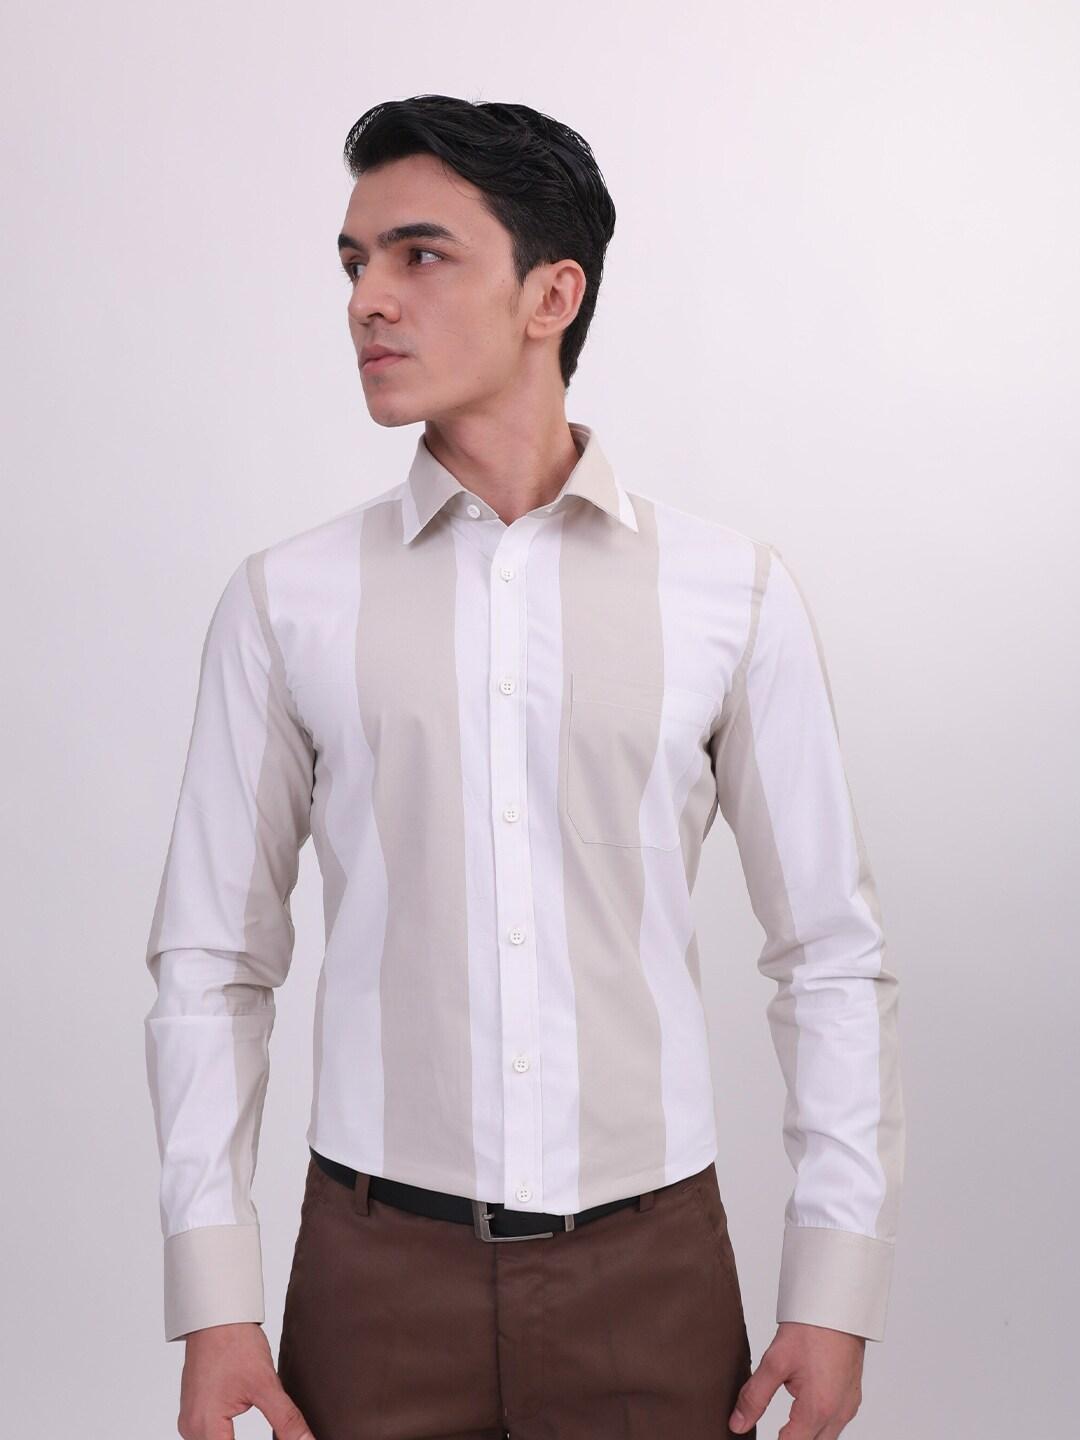 louis stitch vertical striped comfort regular fit opaque cotton formal shirt